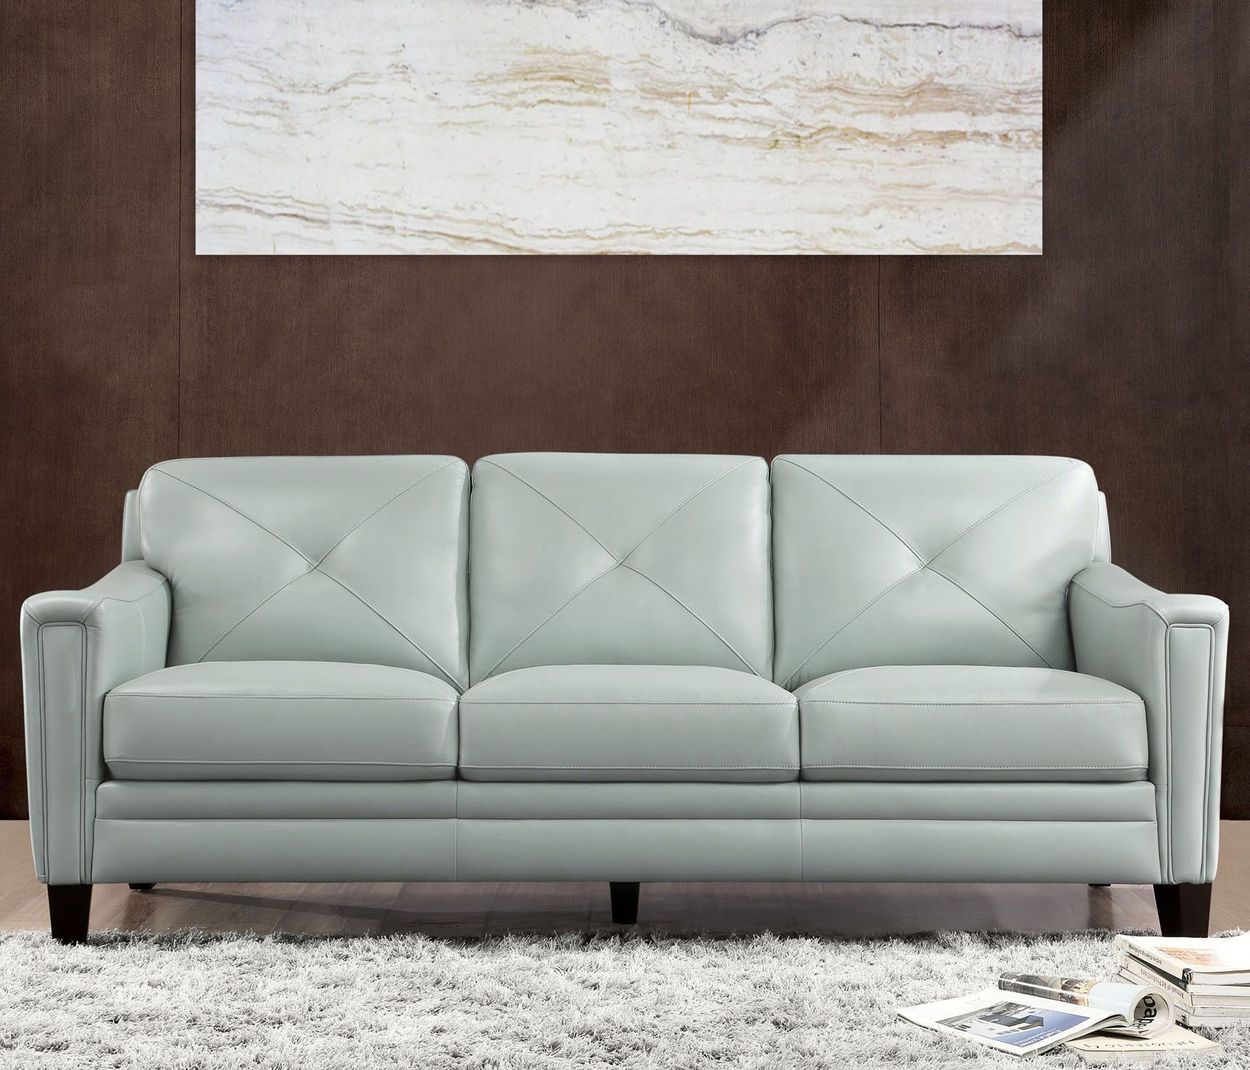 Atmore Top Grain Leather Sofa Costco, Abbyson Living Leather Sectional Costco